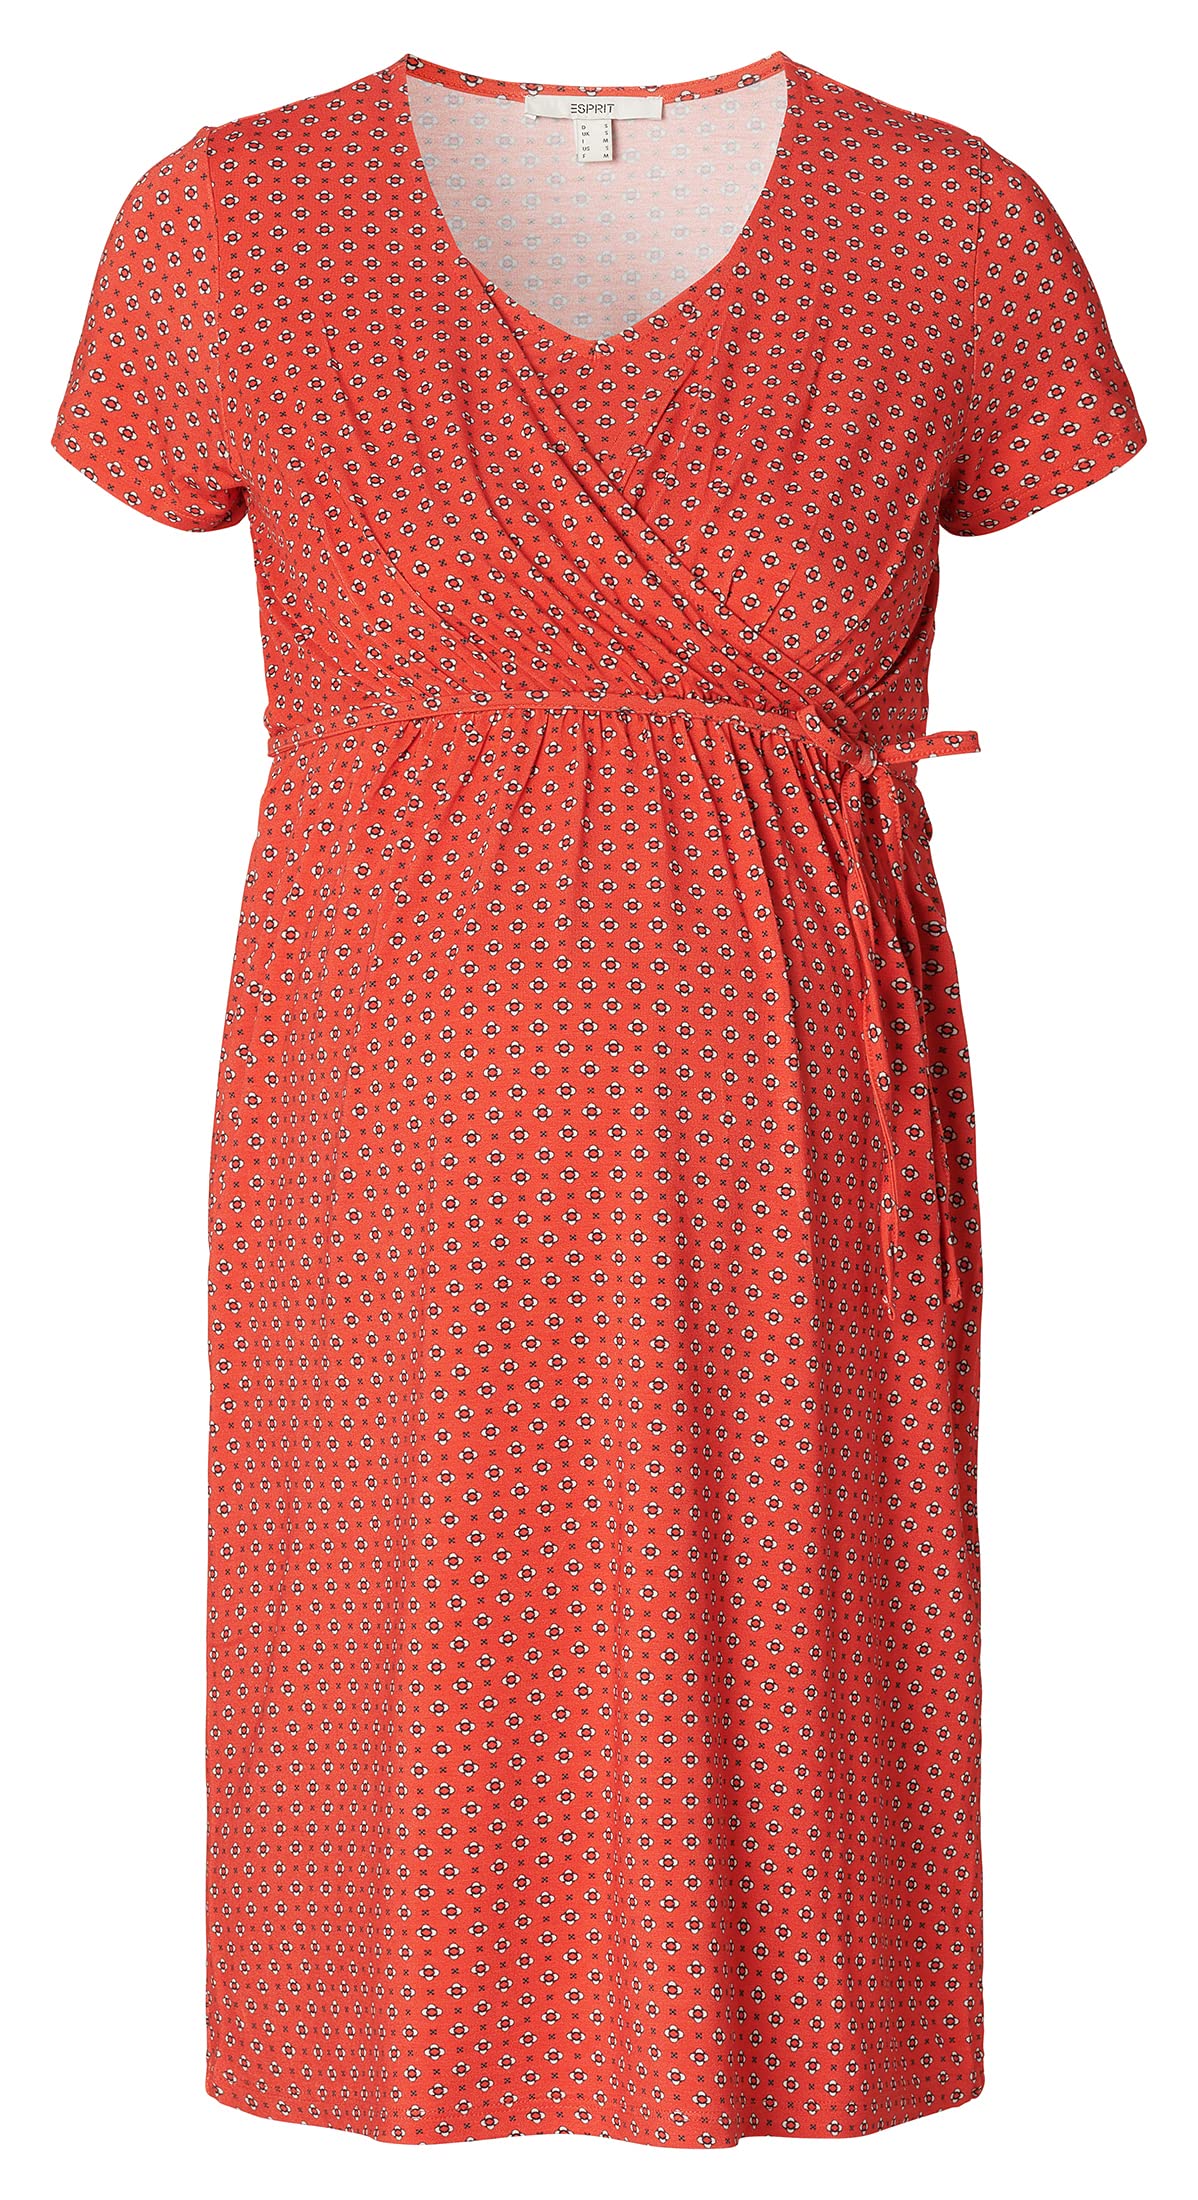 ESPRIT Damen Dress Nursing Short Sleeve Allover Print Kleid, Flame Red-609, L